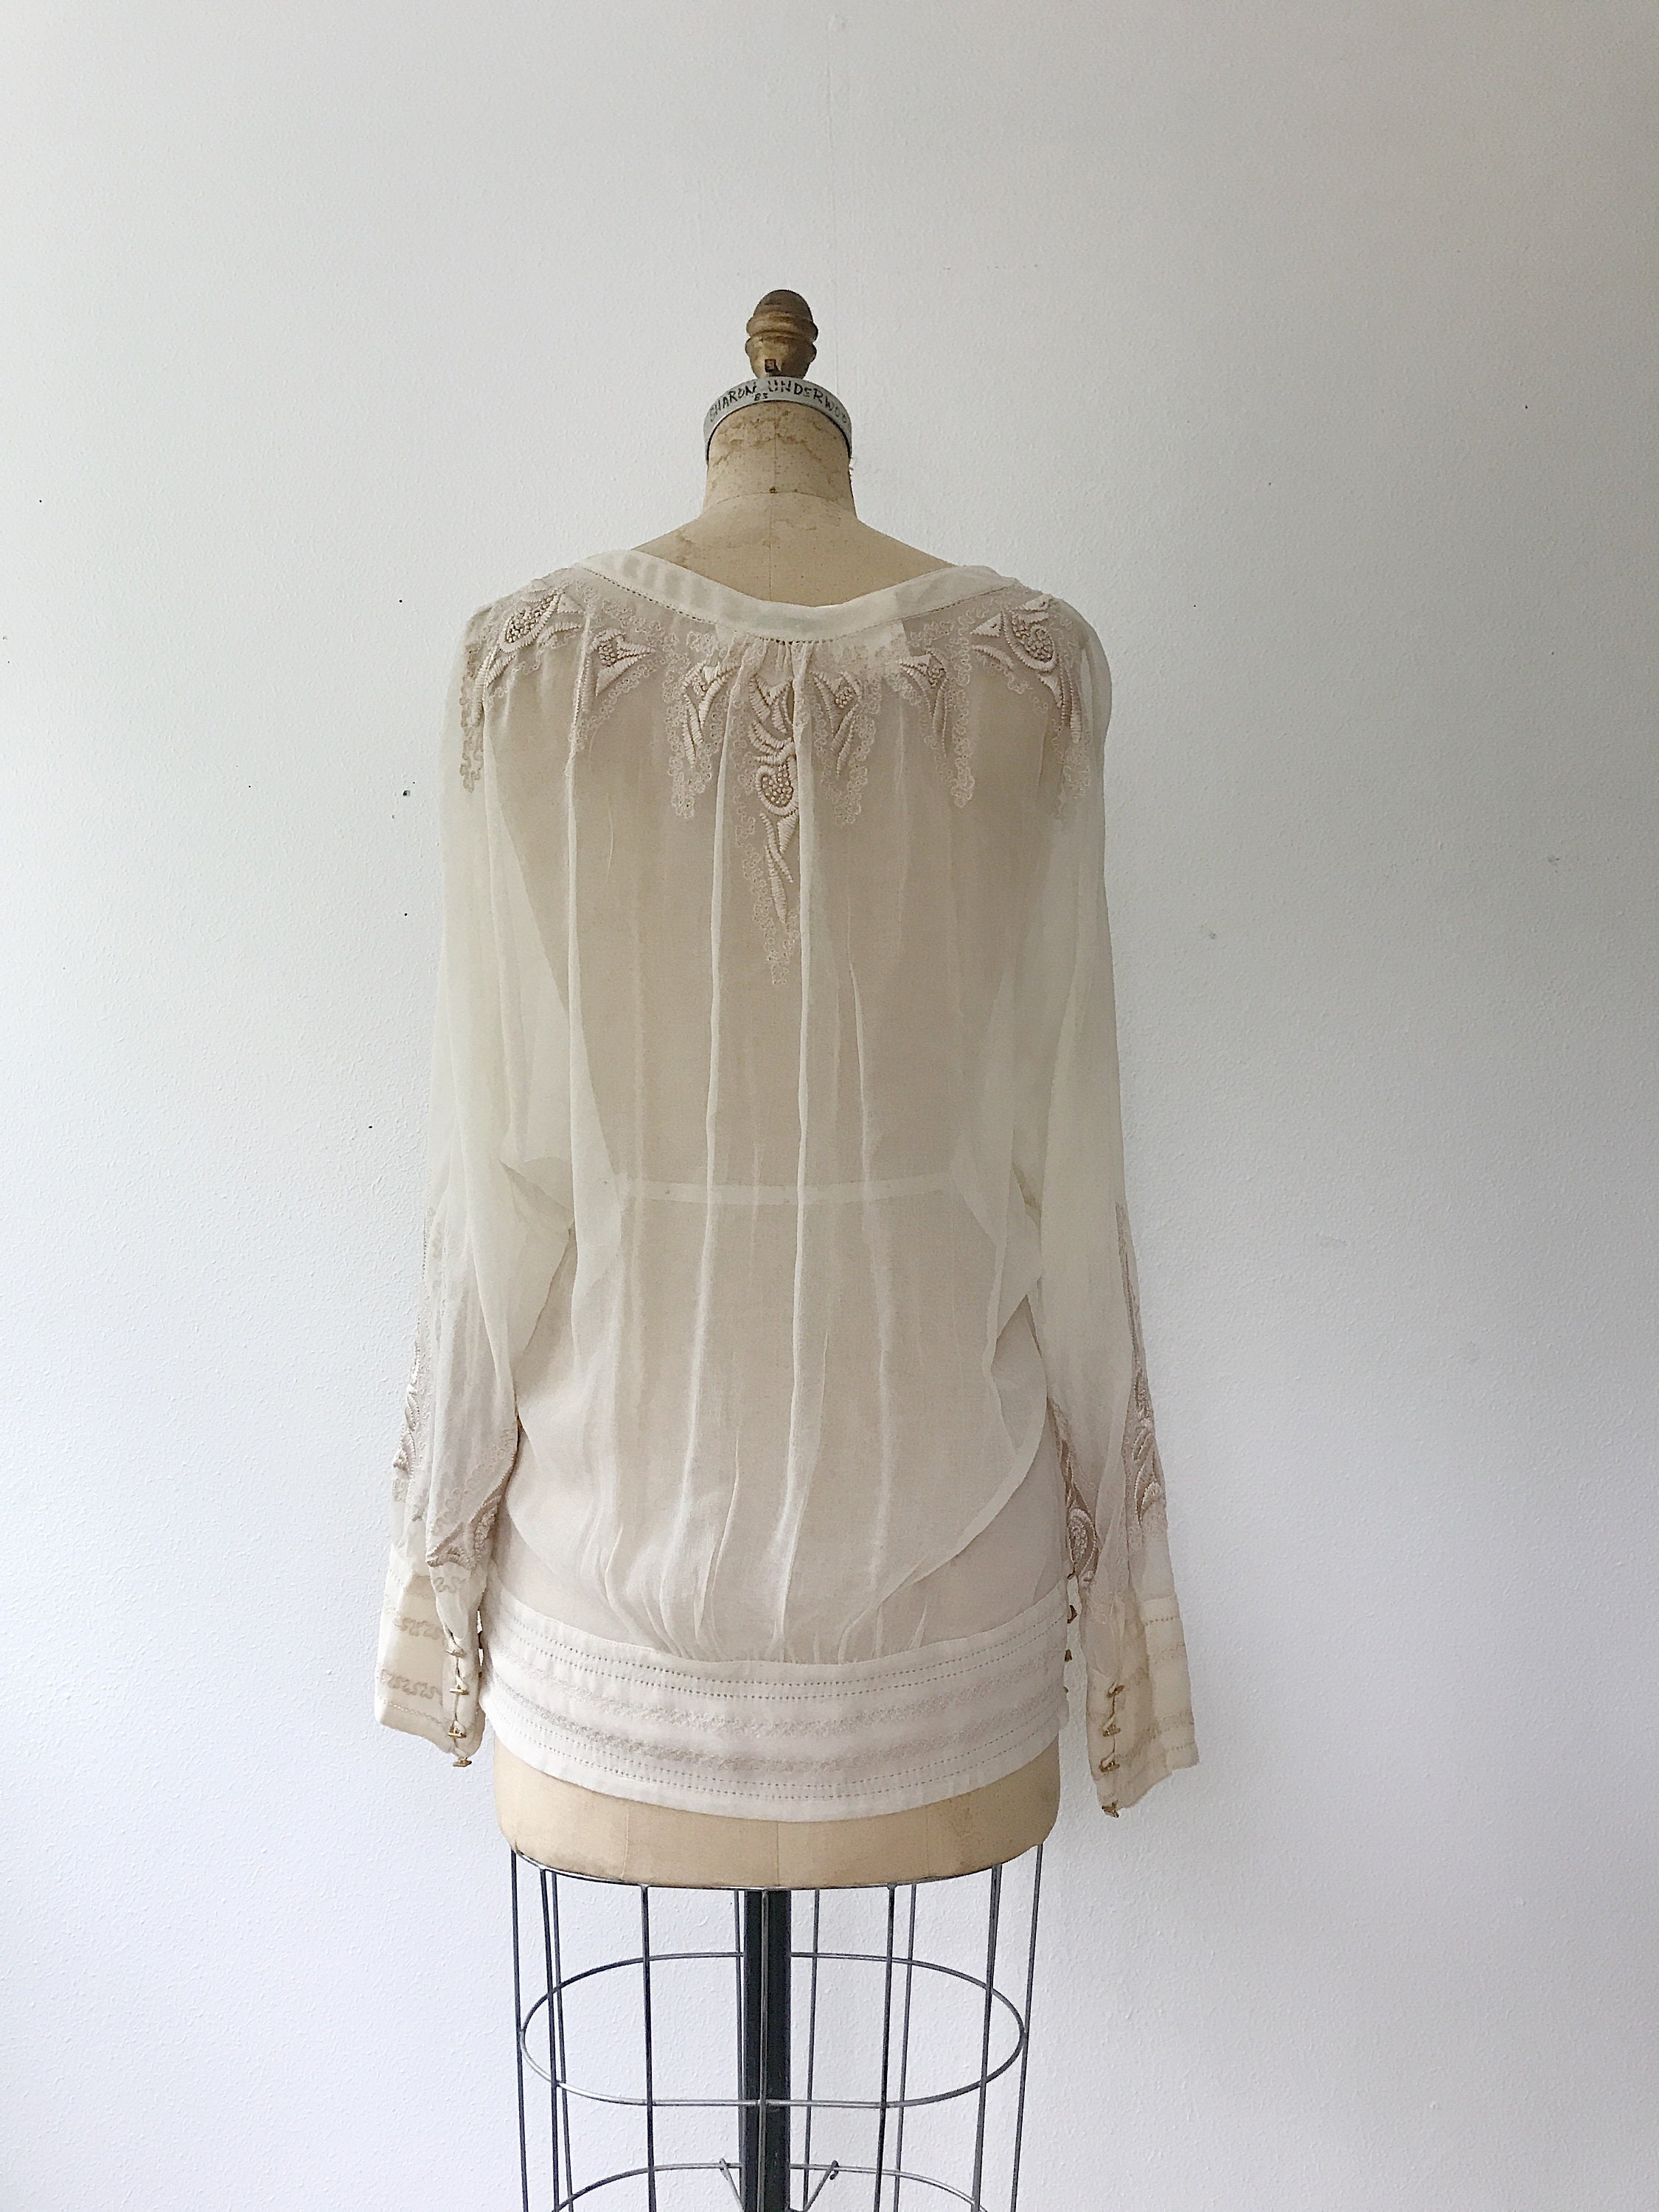 Leifsdottir Blouse / 1920s style blouse / rayon embroidered blouse